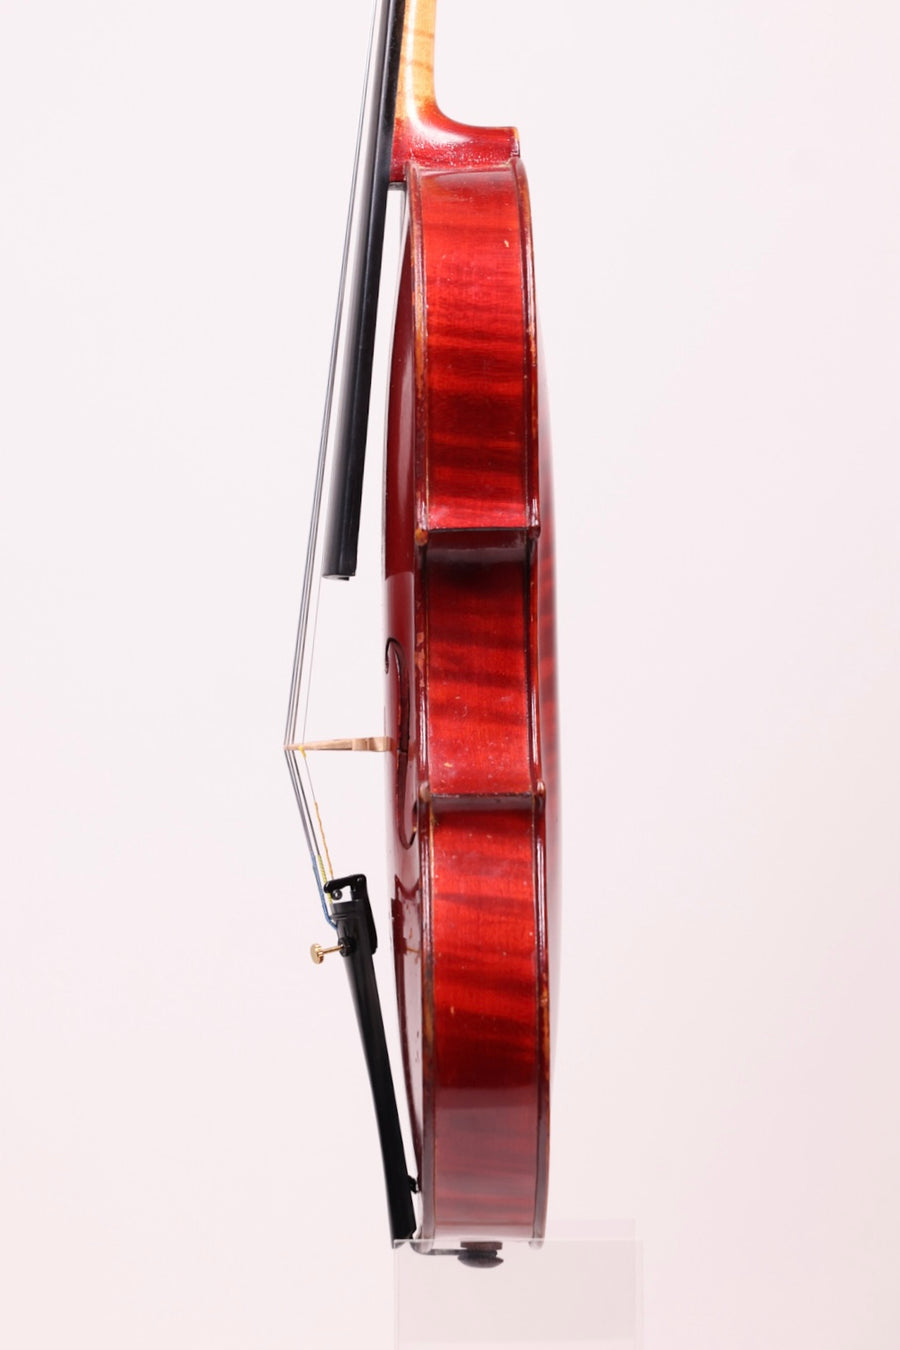 Acoulon & Blondelet “Sarasate” Violin From JTL, Circa 1908-1914.